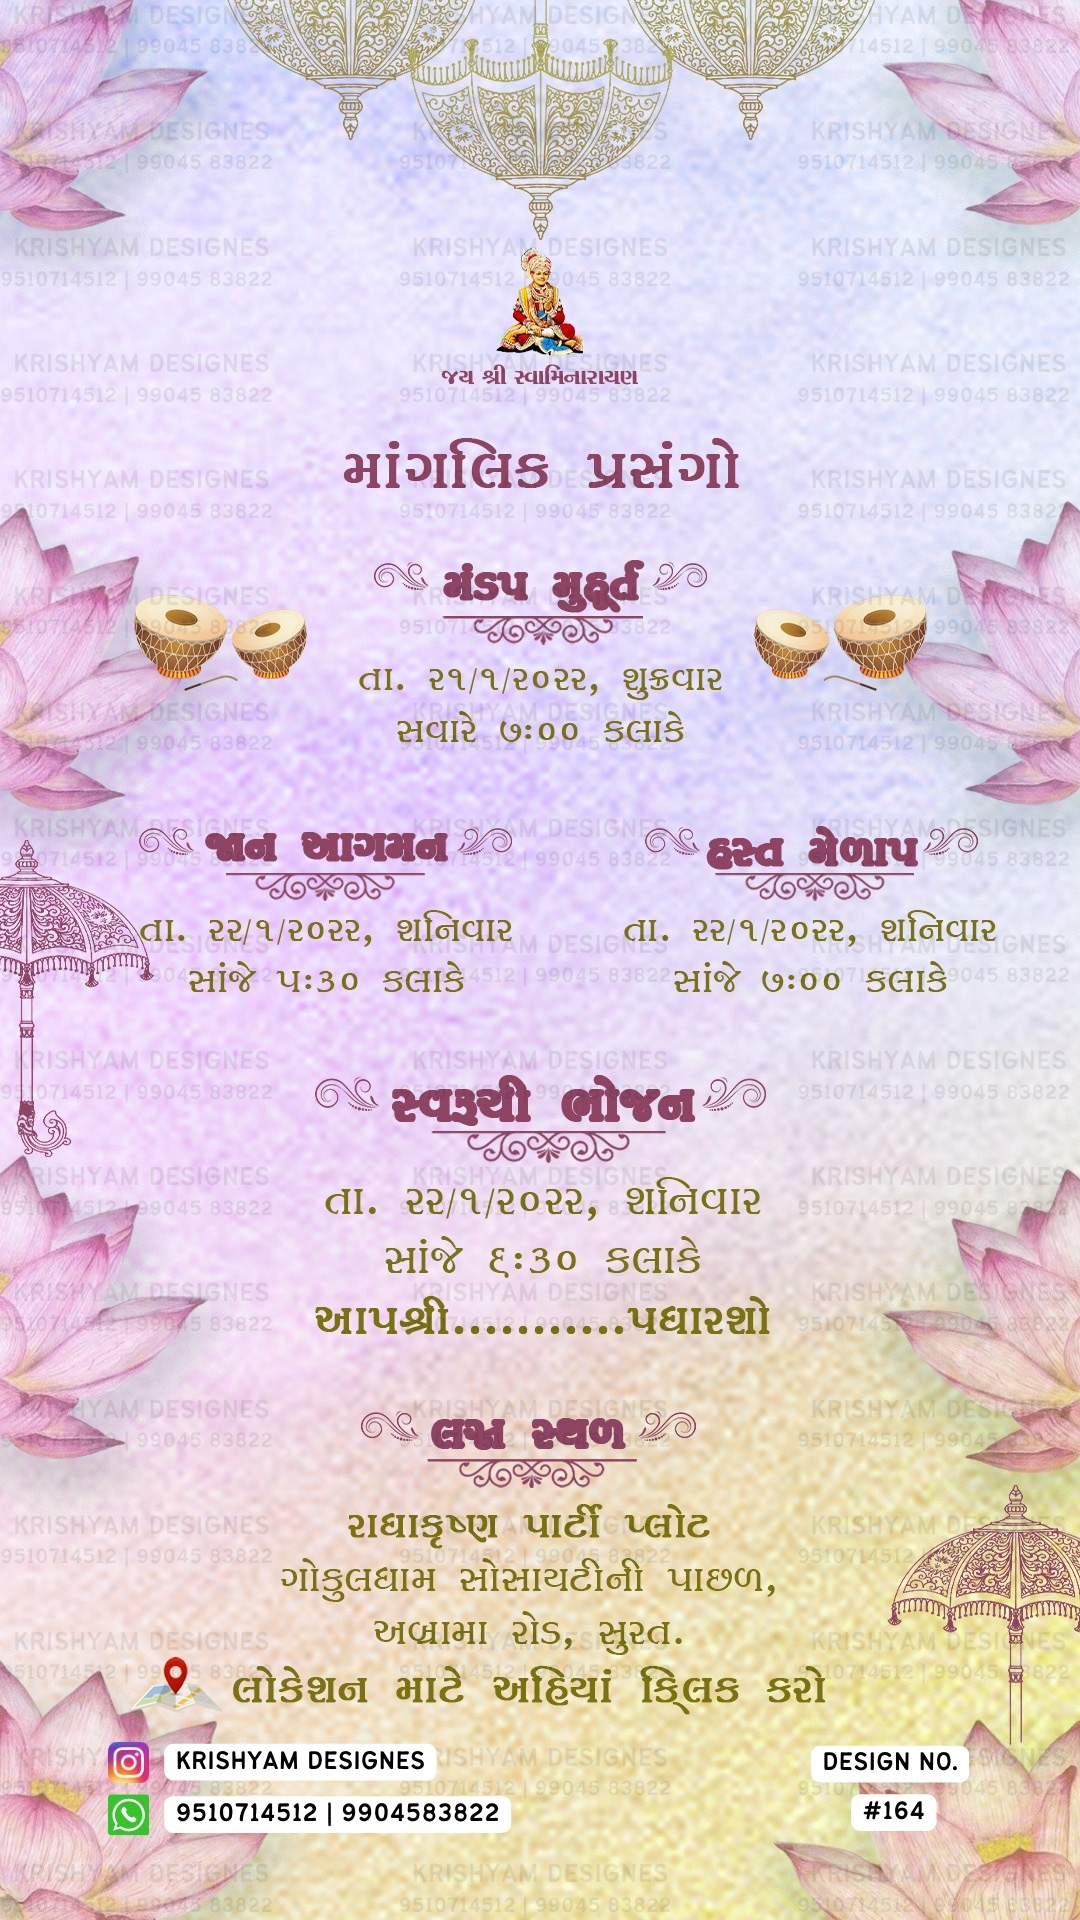 Invitation wedding invitation invite Invitation Card Weddings Gujarati wedding ahmedabad India Gujarati Wedding Cards treditional style